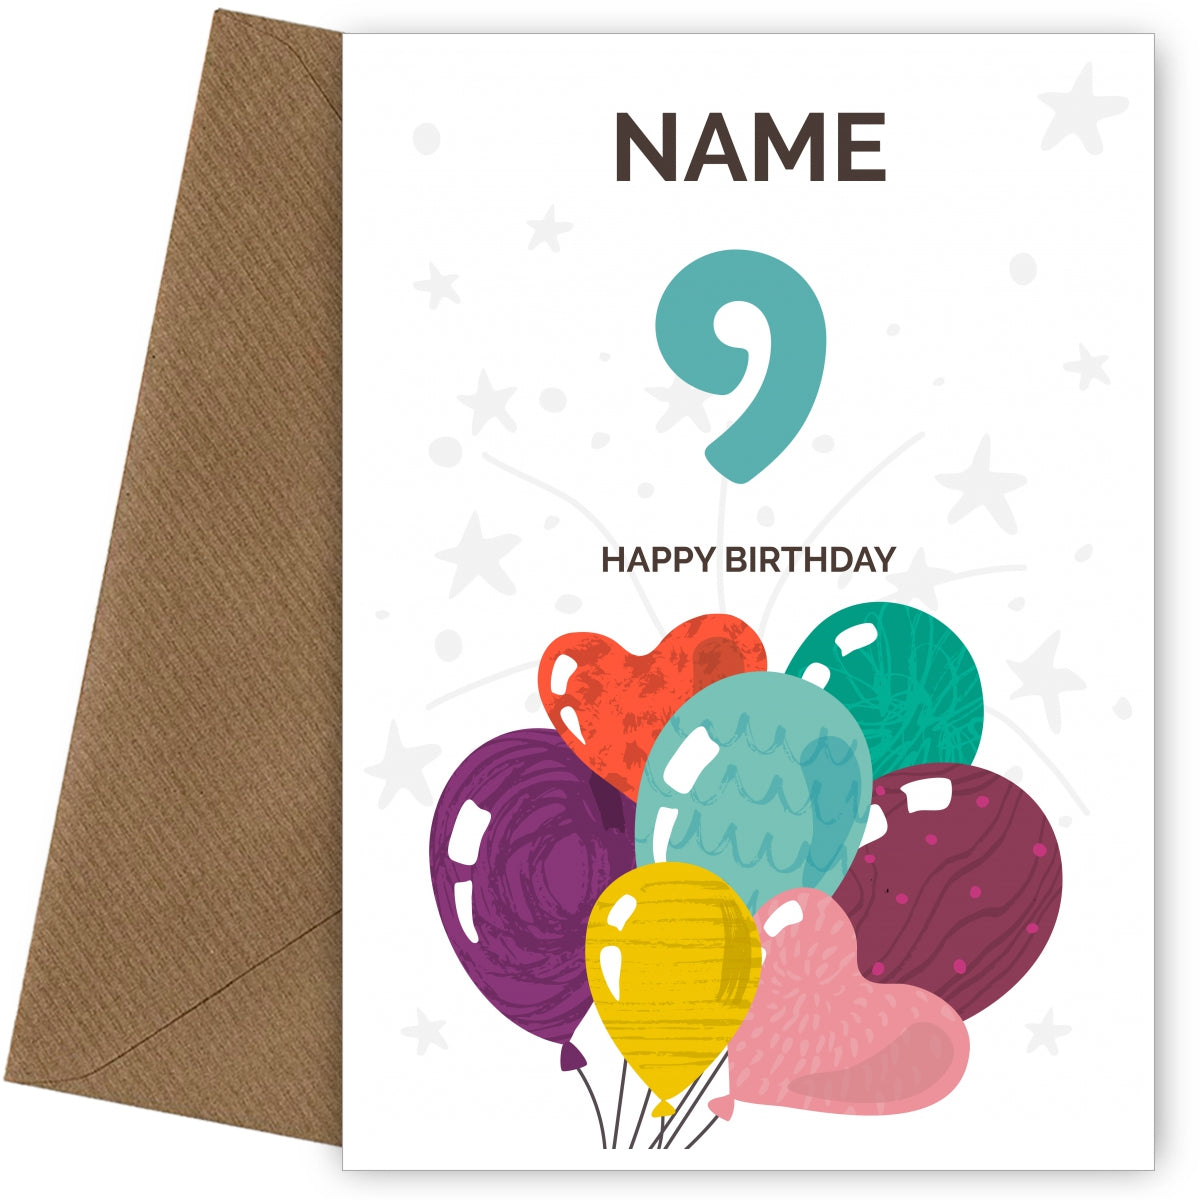 Happy 9th Birthday Card - Fun Balloons Design